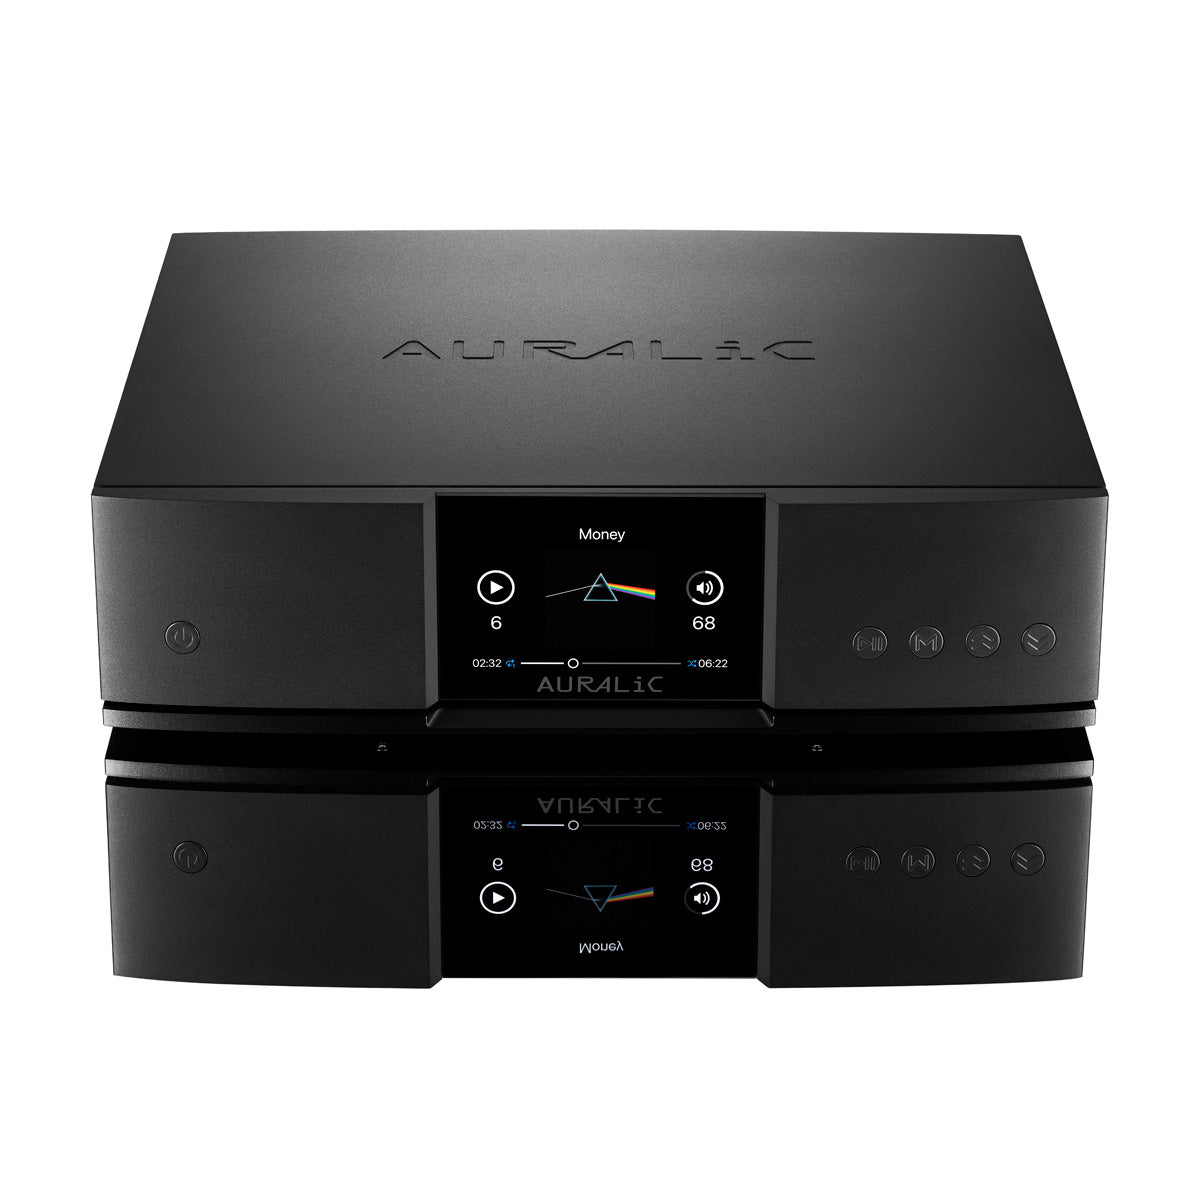 AURALiC Aries G2.2 Streamer streaming player